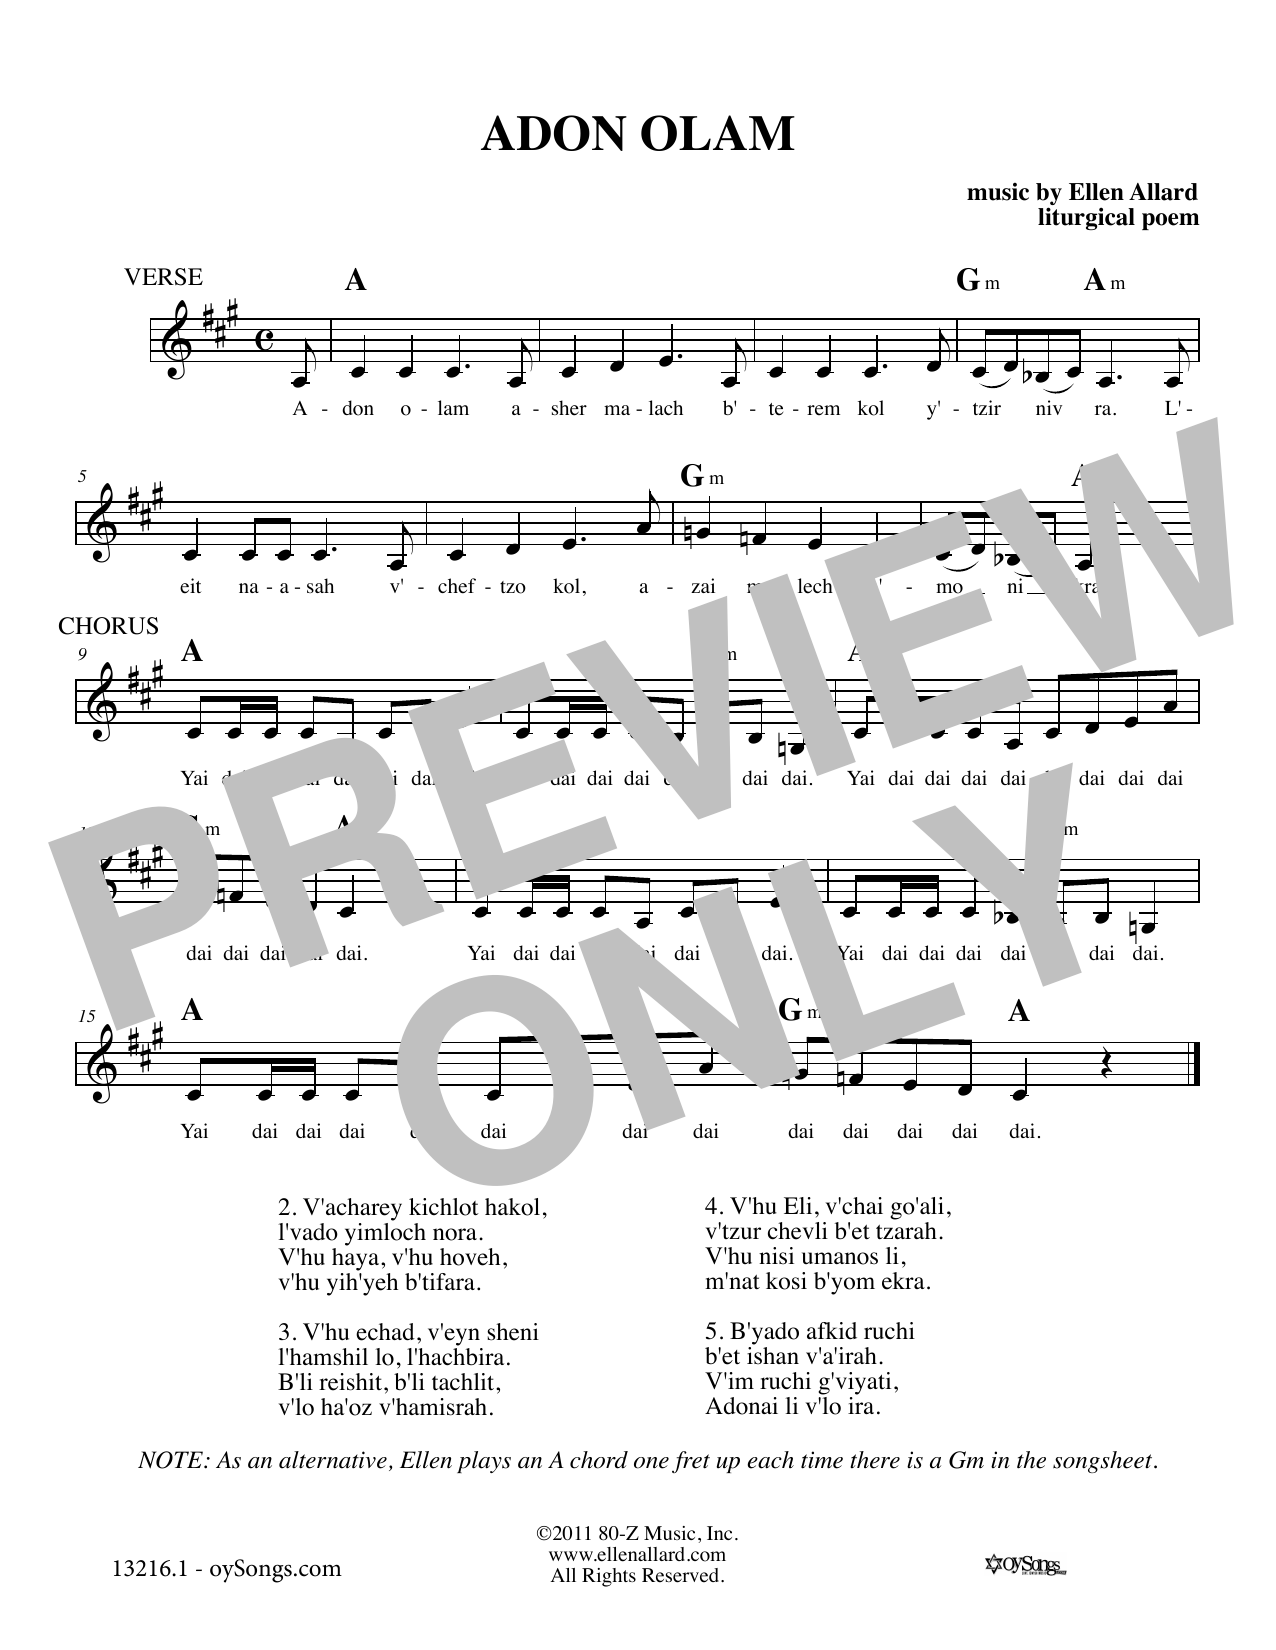 Ellen Allard Adon Olam sheet music notes and chords. Download Printable PDF.